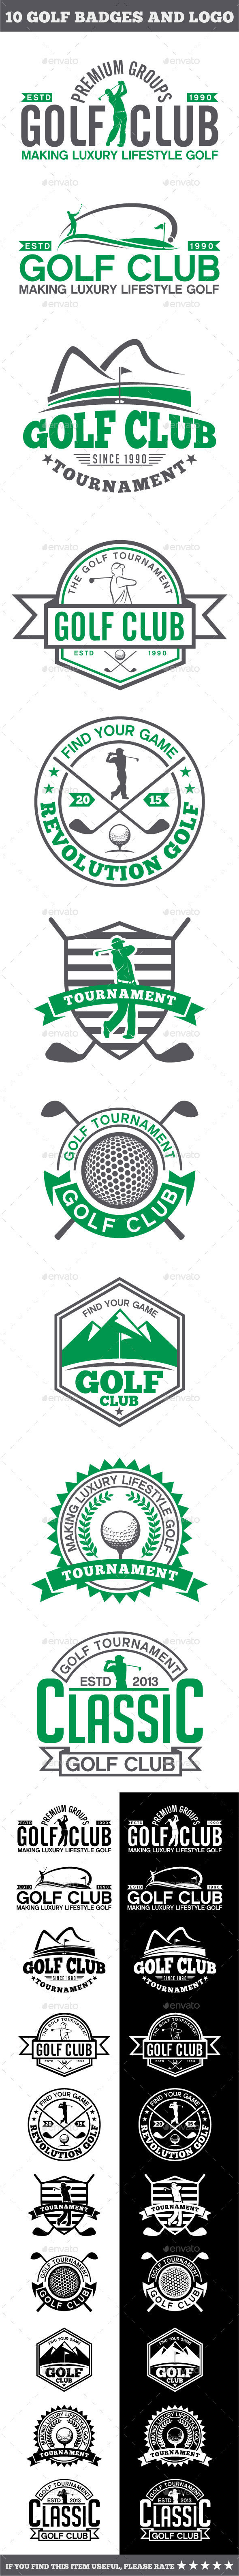 Golf badgs 1